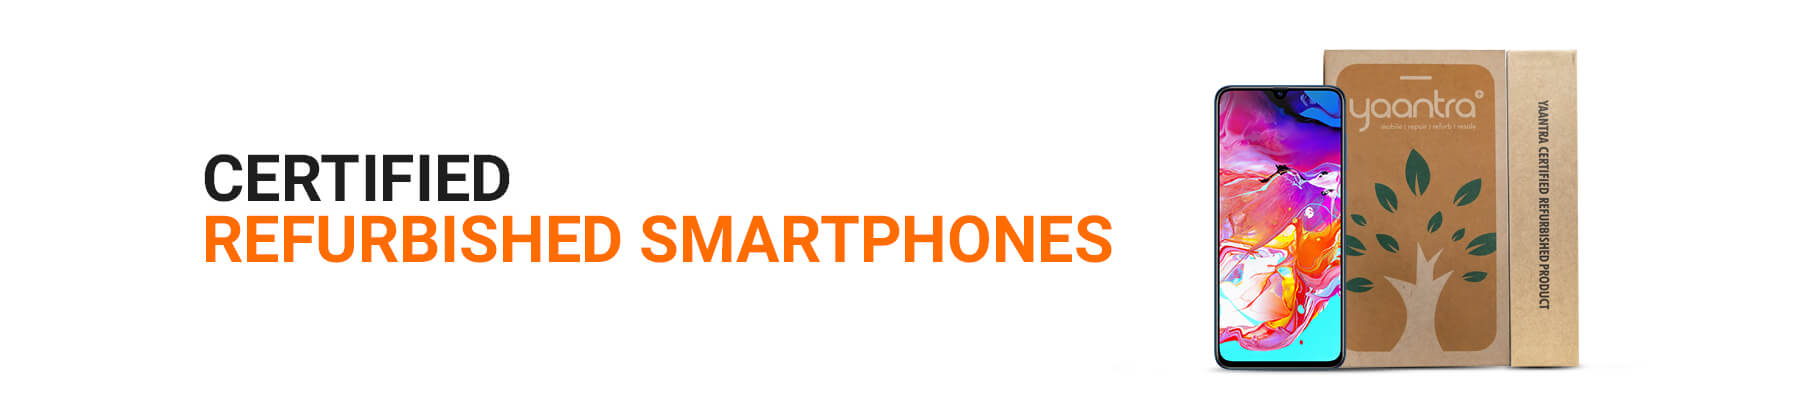 Yaantra Refurbished Smartphone